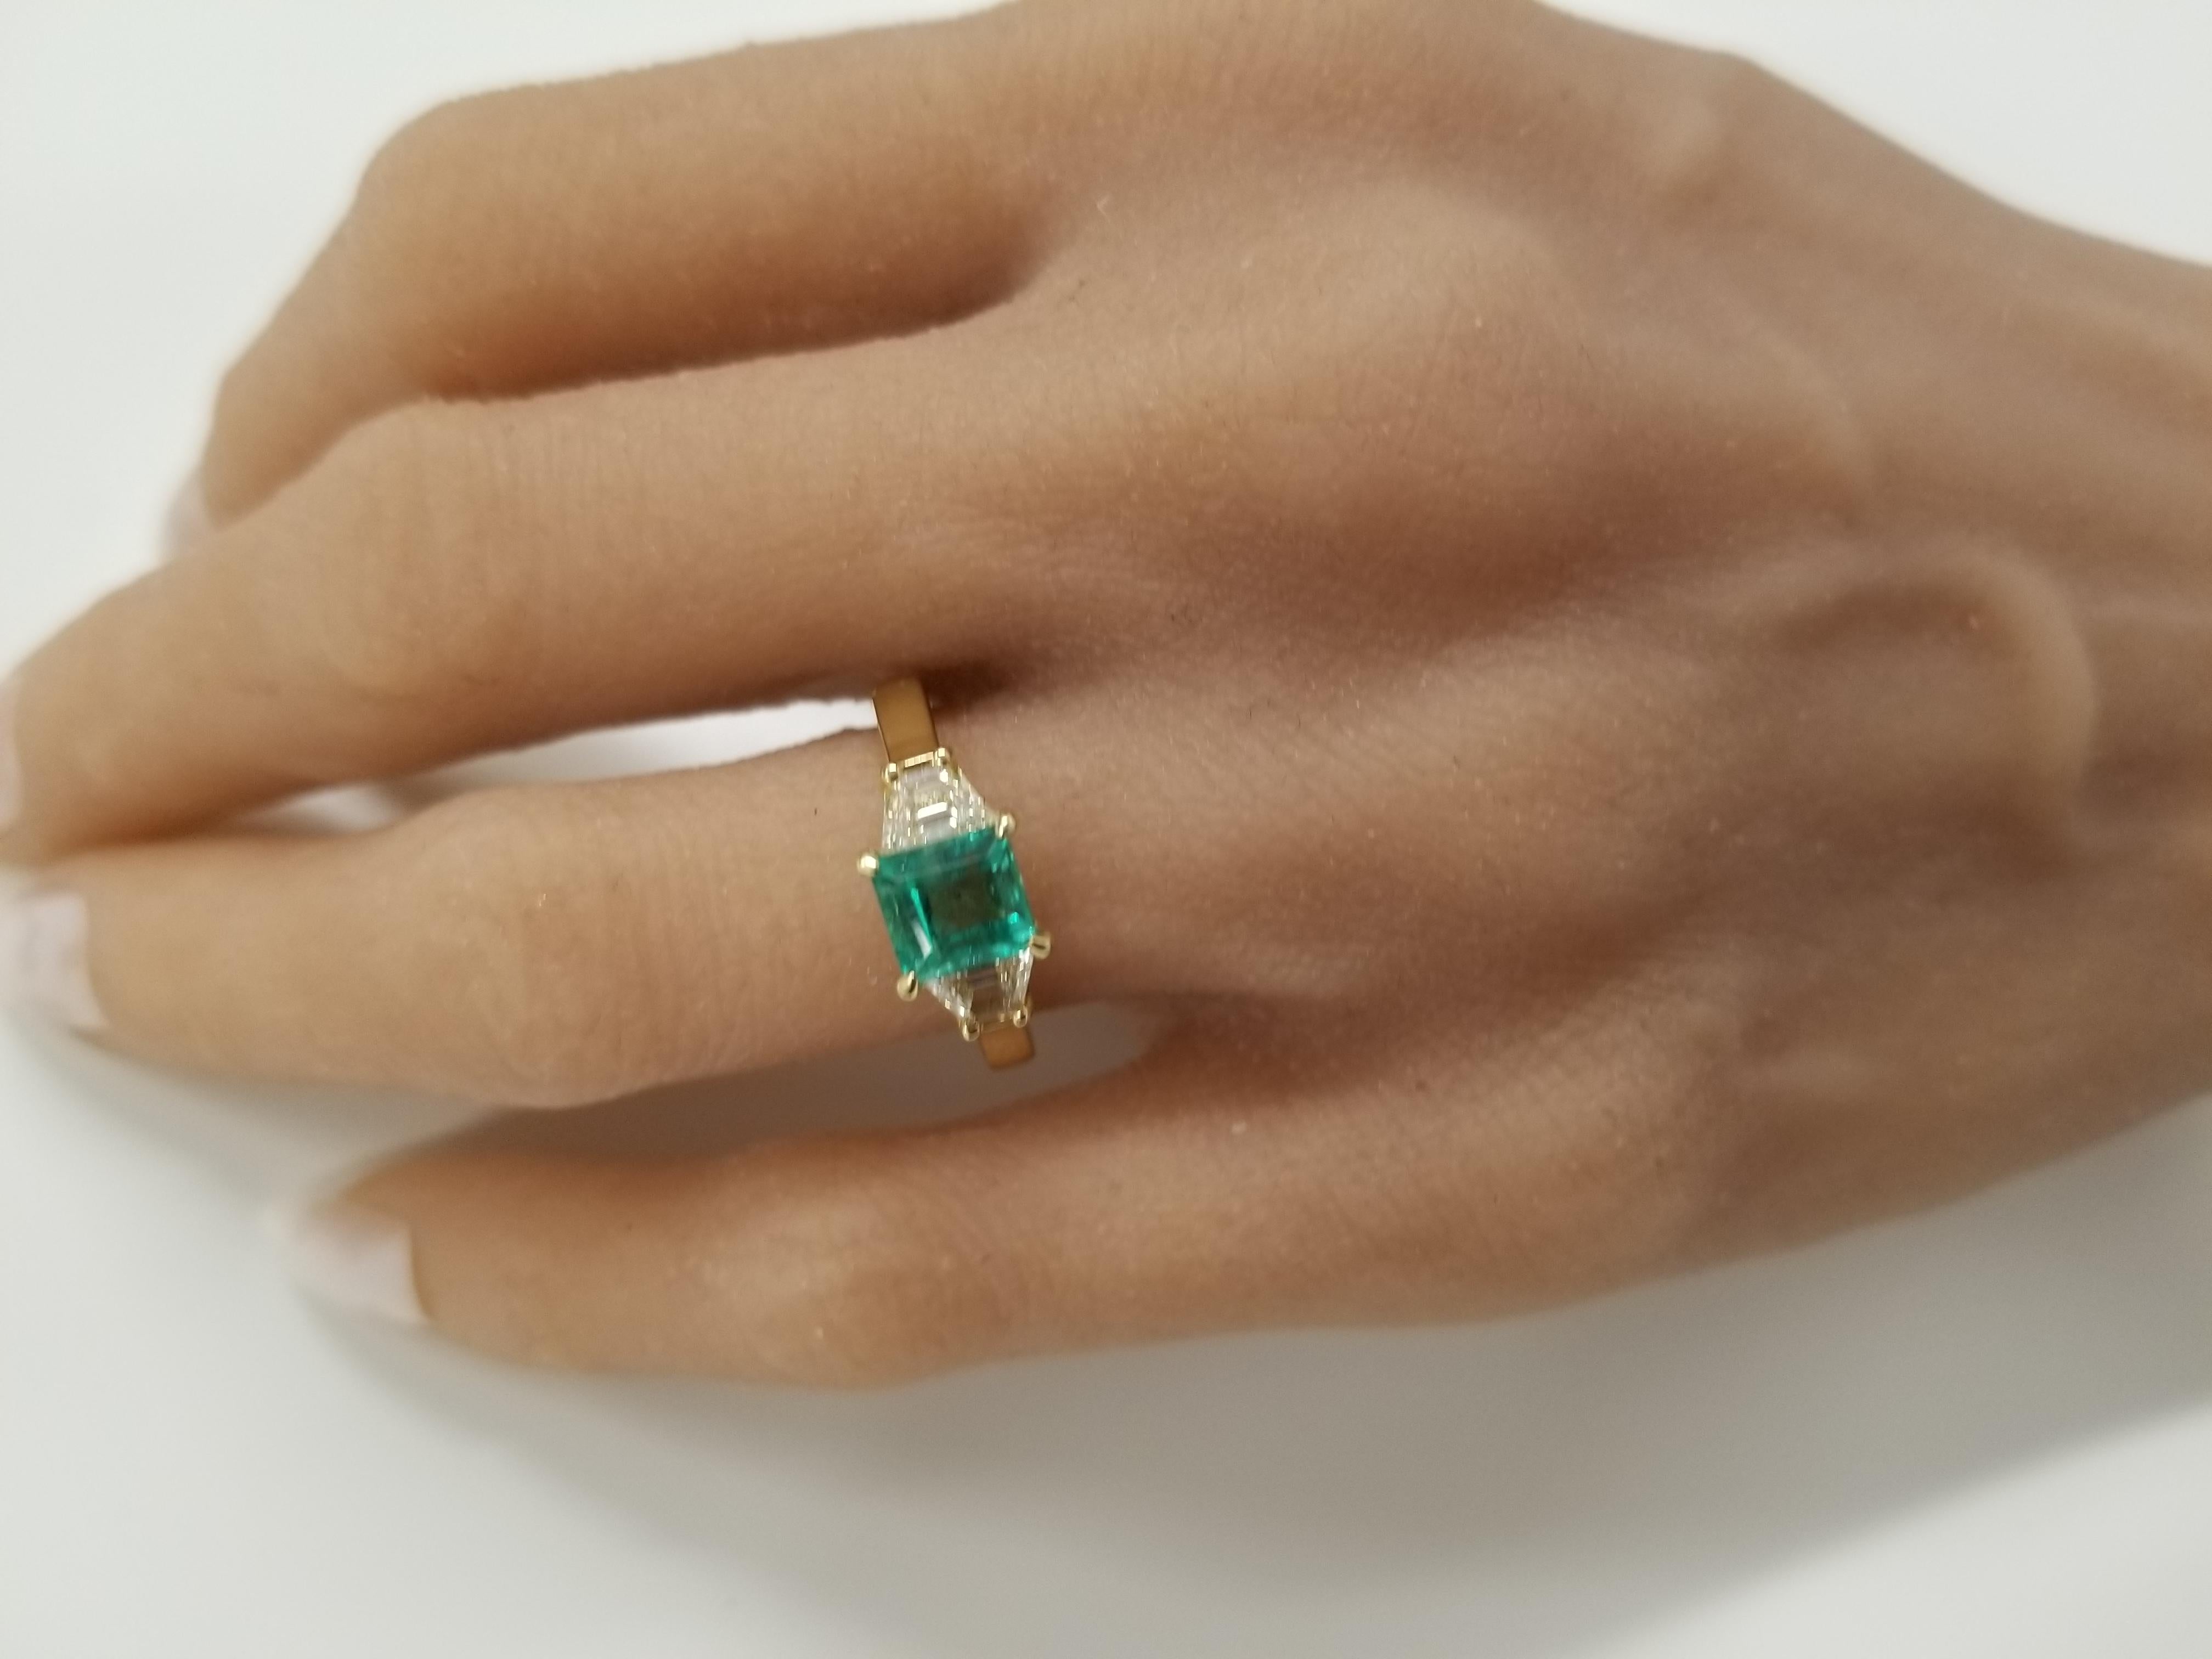 Women's 1.38 Carat Emerald Cut Emerald and Diamond Cocktail Ring in 18 Karat Gold